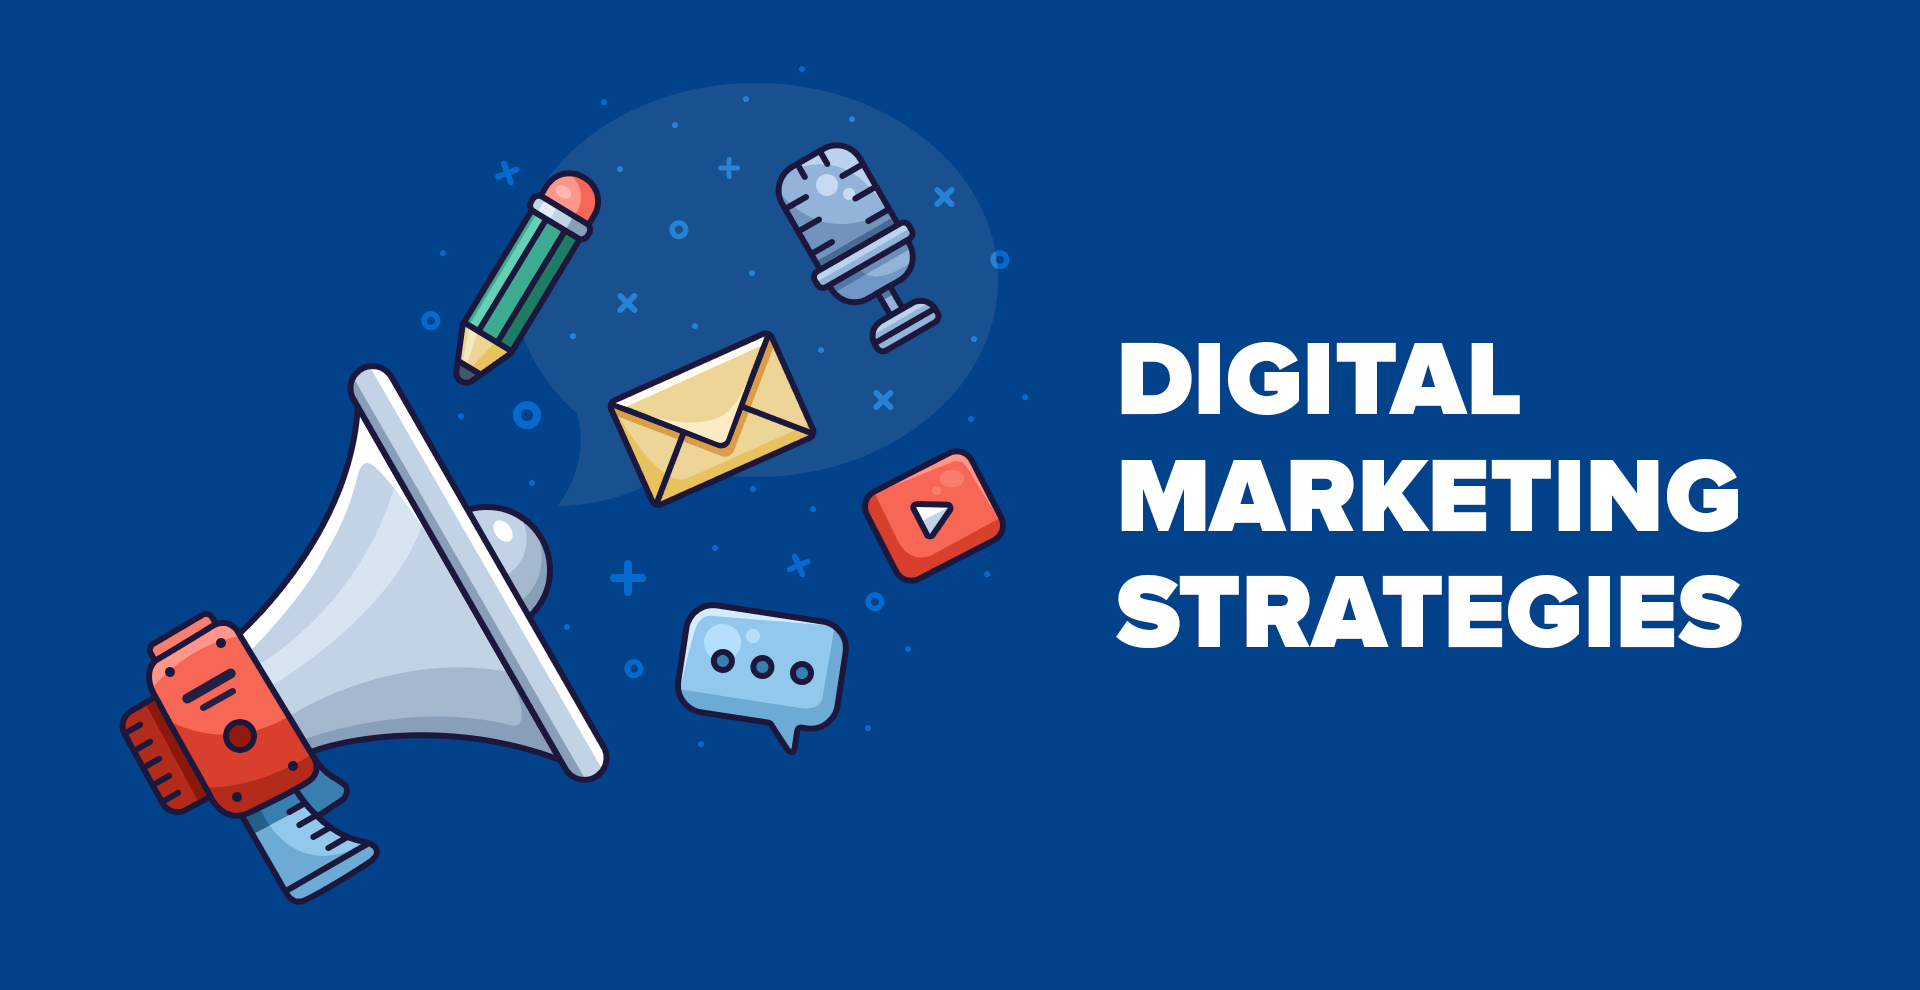 Digital Marketing Strategies For Startups - Timesways